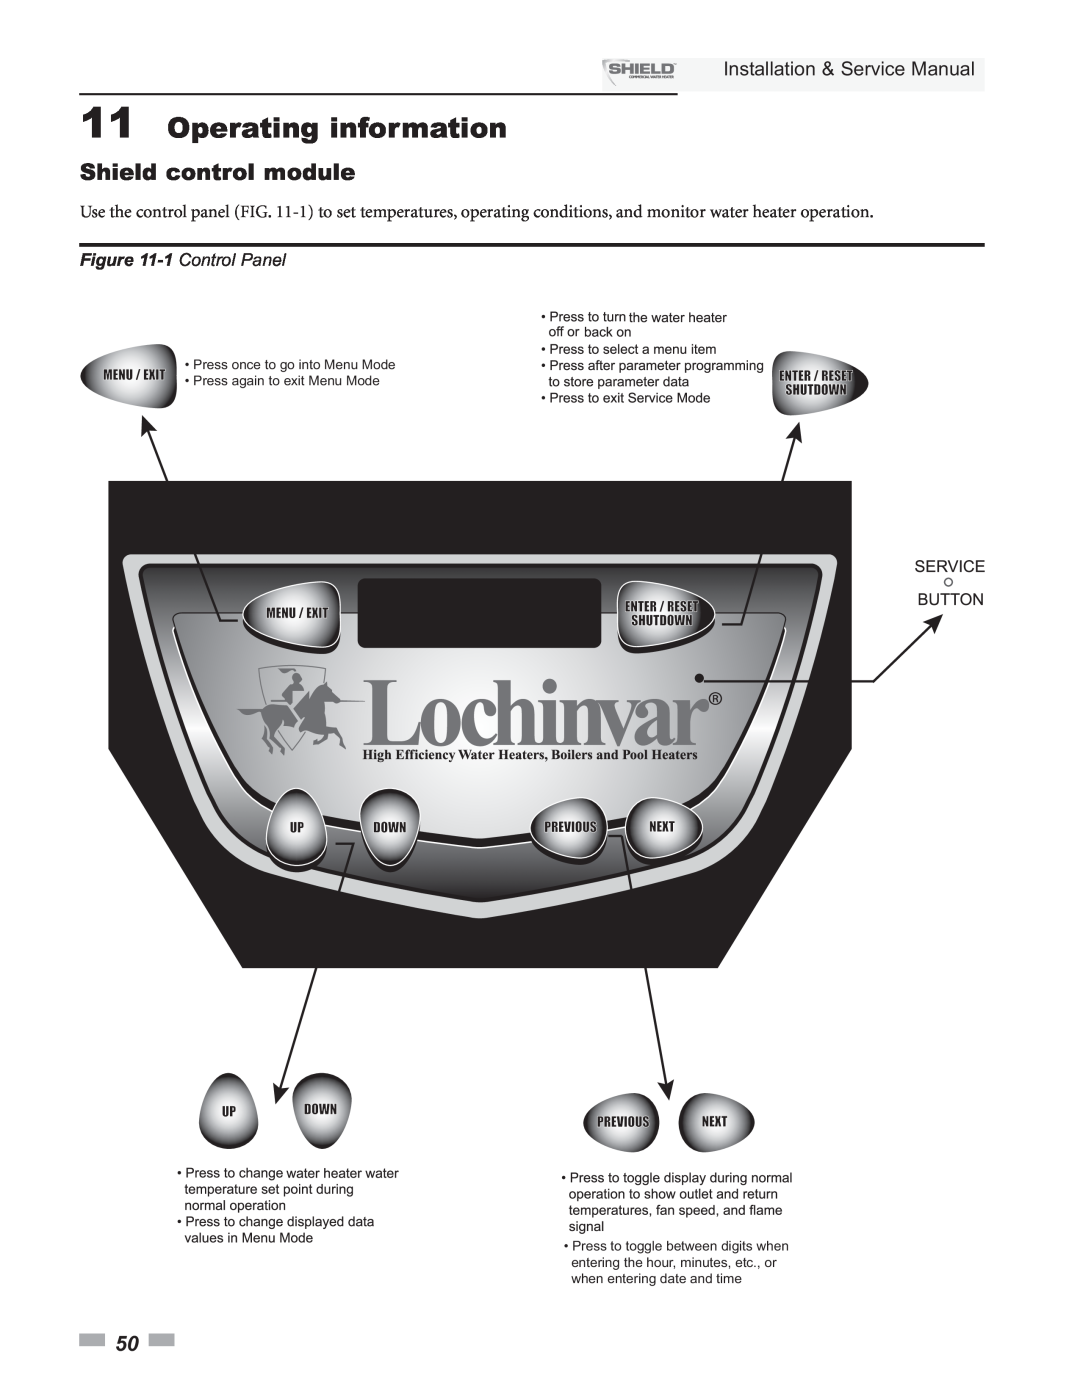 Lochinvar SNA500-125 Shield control module, Operating information, Installation & Service Manual, 1 Control Panel 